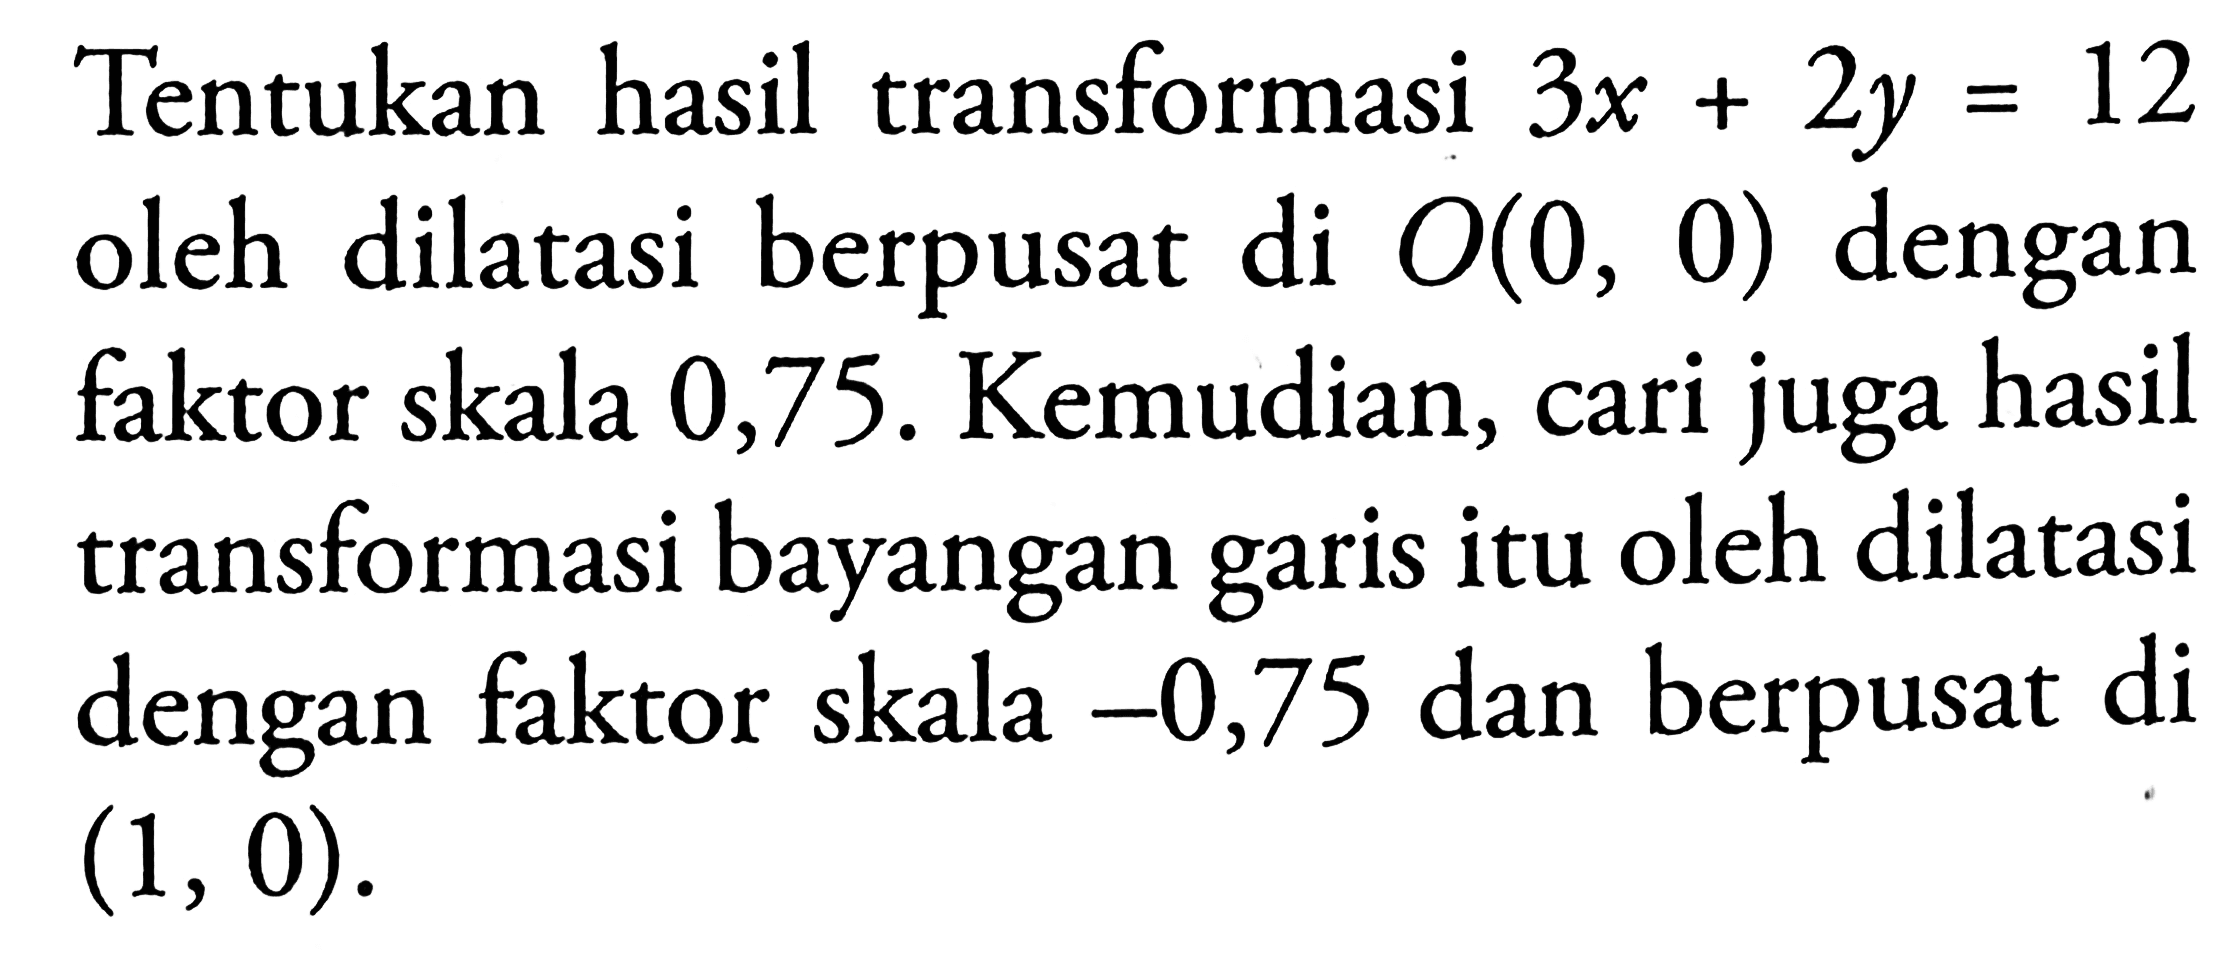 Tentukan hasil transformasi 3x+2y=12 oleh dilatasi berpusat di O(0, 0) dengan faktor skala 0,75. Kemudian, cari juga hasil transformasi bayangan garis itu oleh dilatasi dengan faktor skala -0,75 dan berpusat di (1,0).